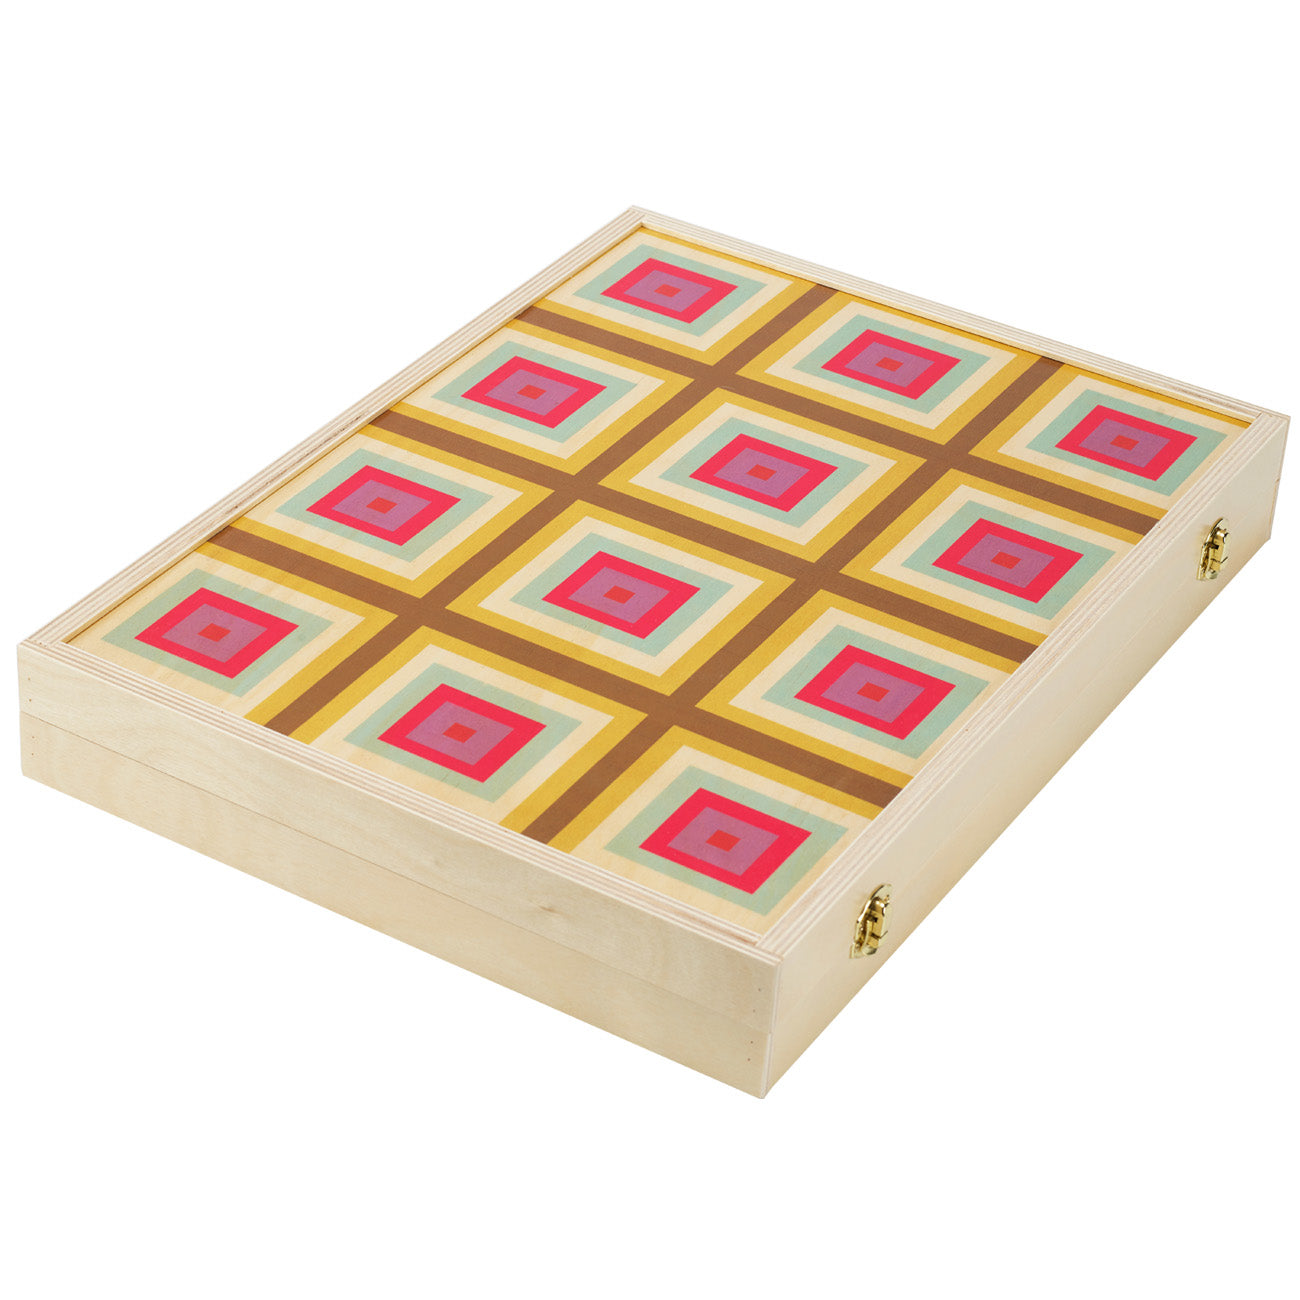 squaresville yellow tabletop backgammon